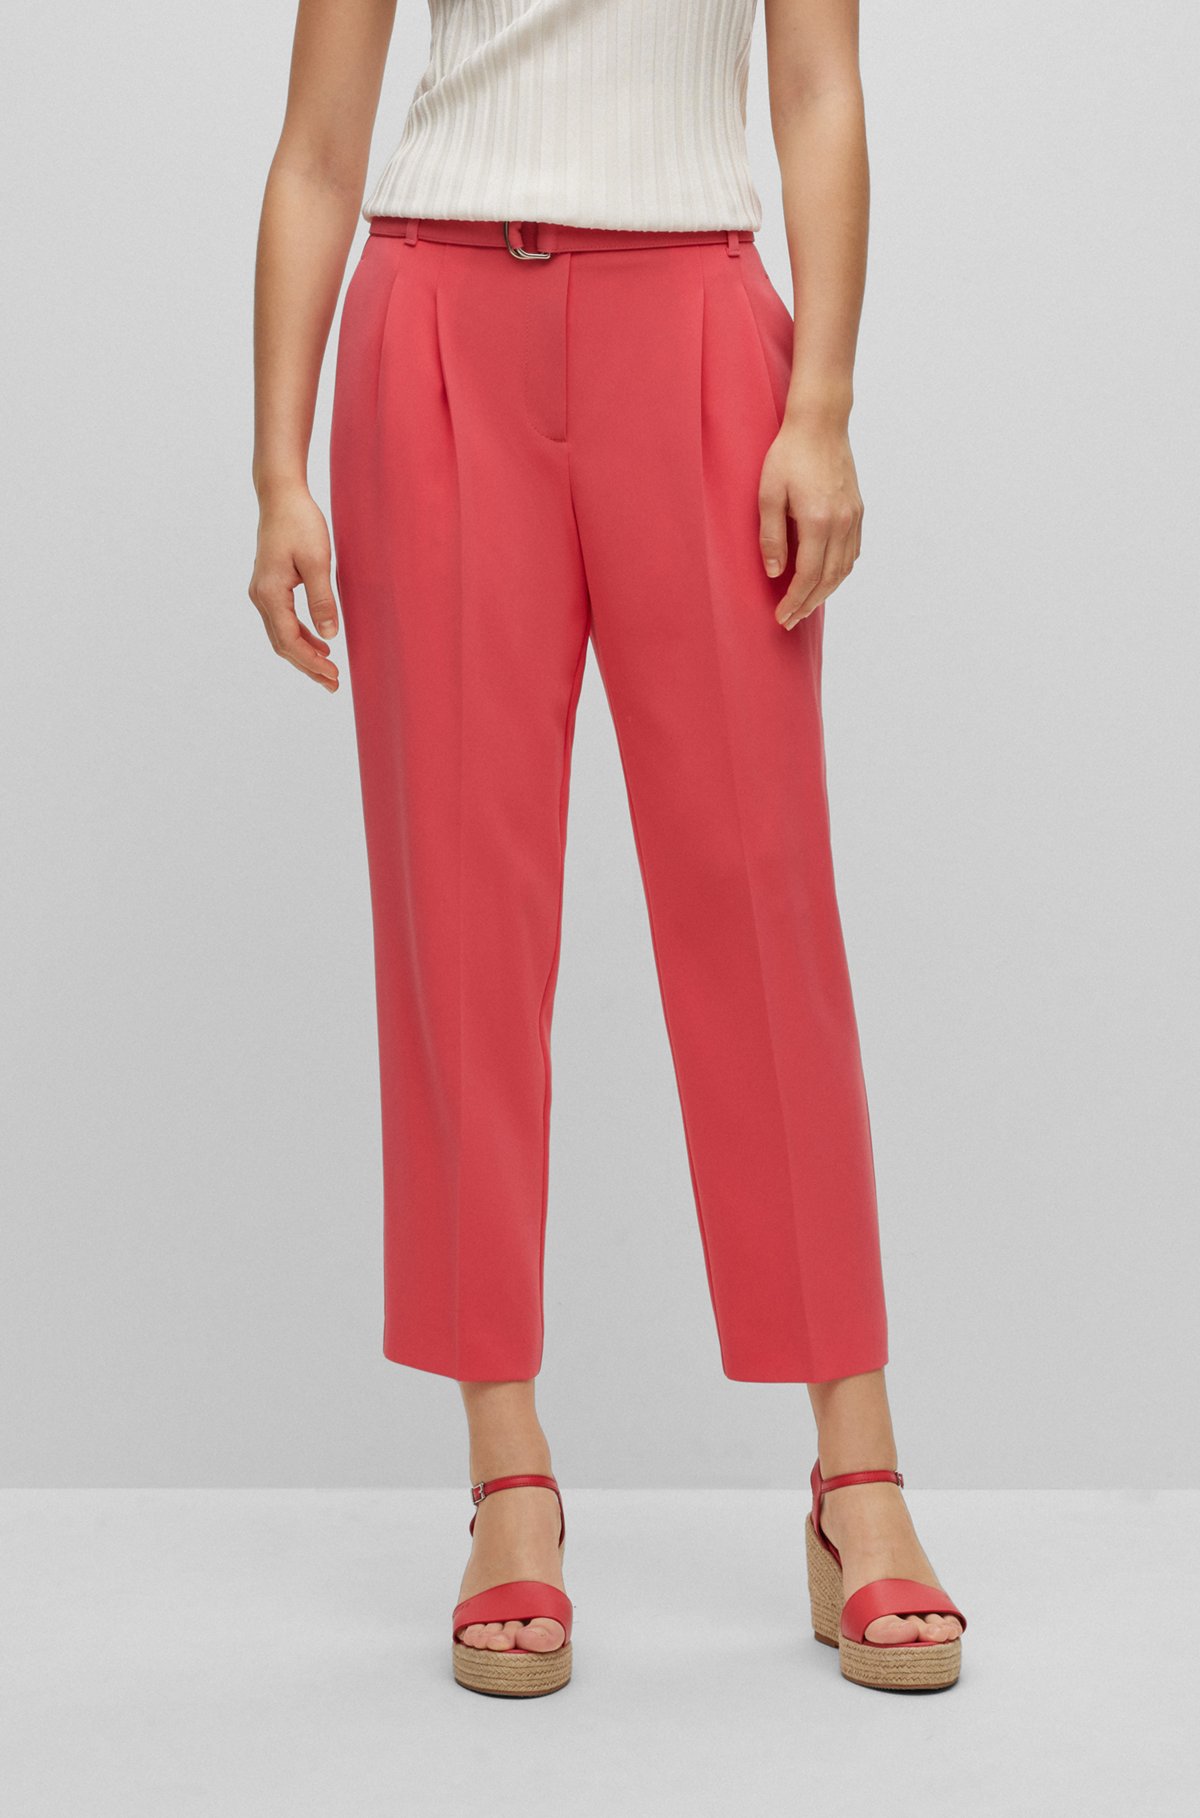 Pantalones tobilleros regular fit de crepé japonés, Pink